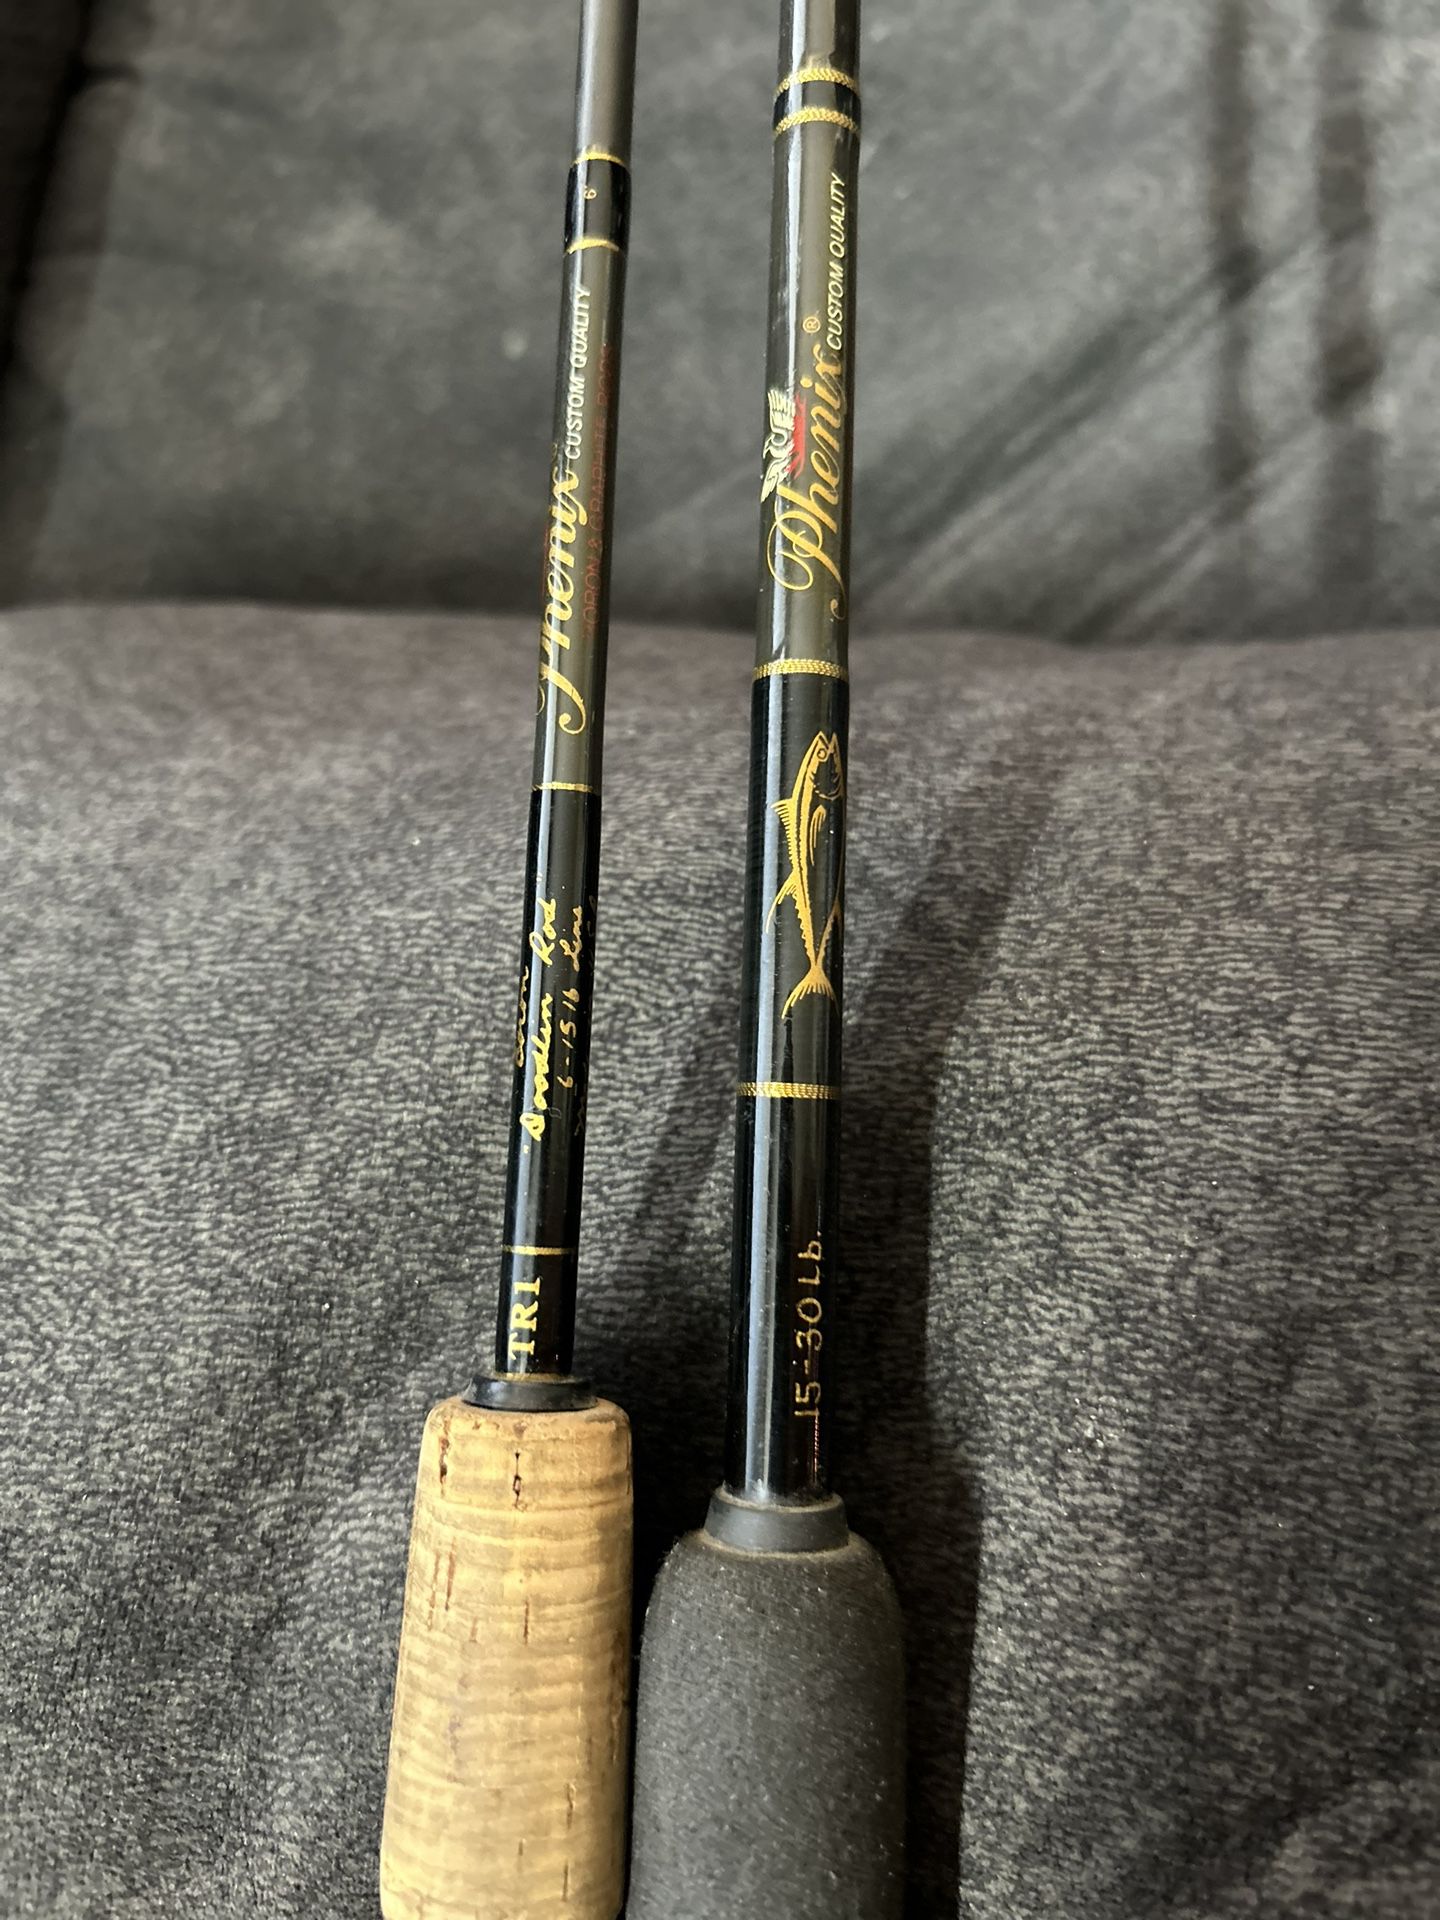 2 Baitcasting Phenix Boron Fishing Rods $160/both